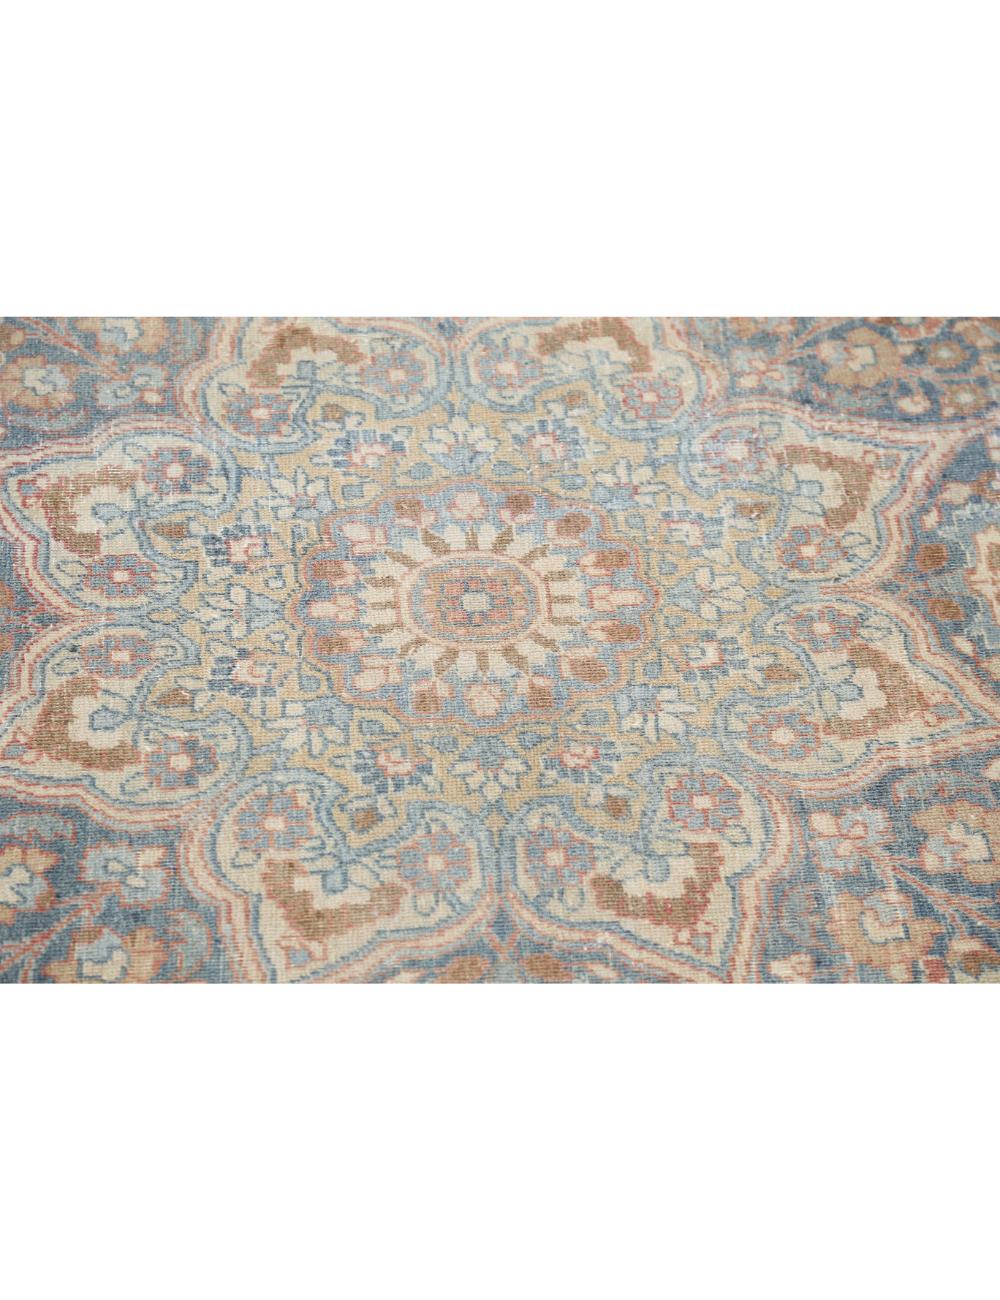 Hand Knotted Vintage Persian Tabriz Wool Rug - 7'10'' x 11'8'' Arteverk Arteverk Rugs